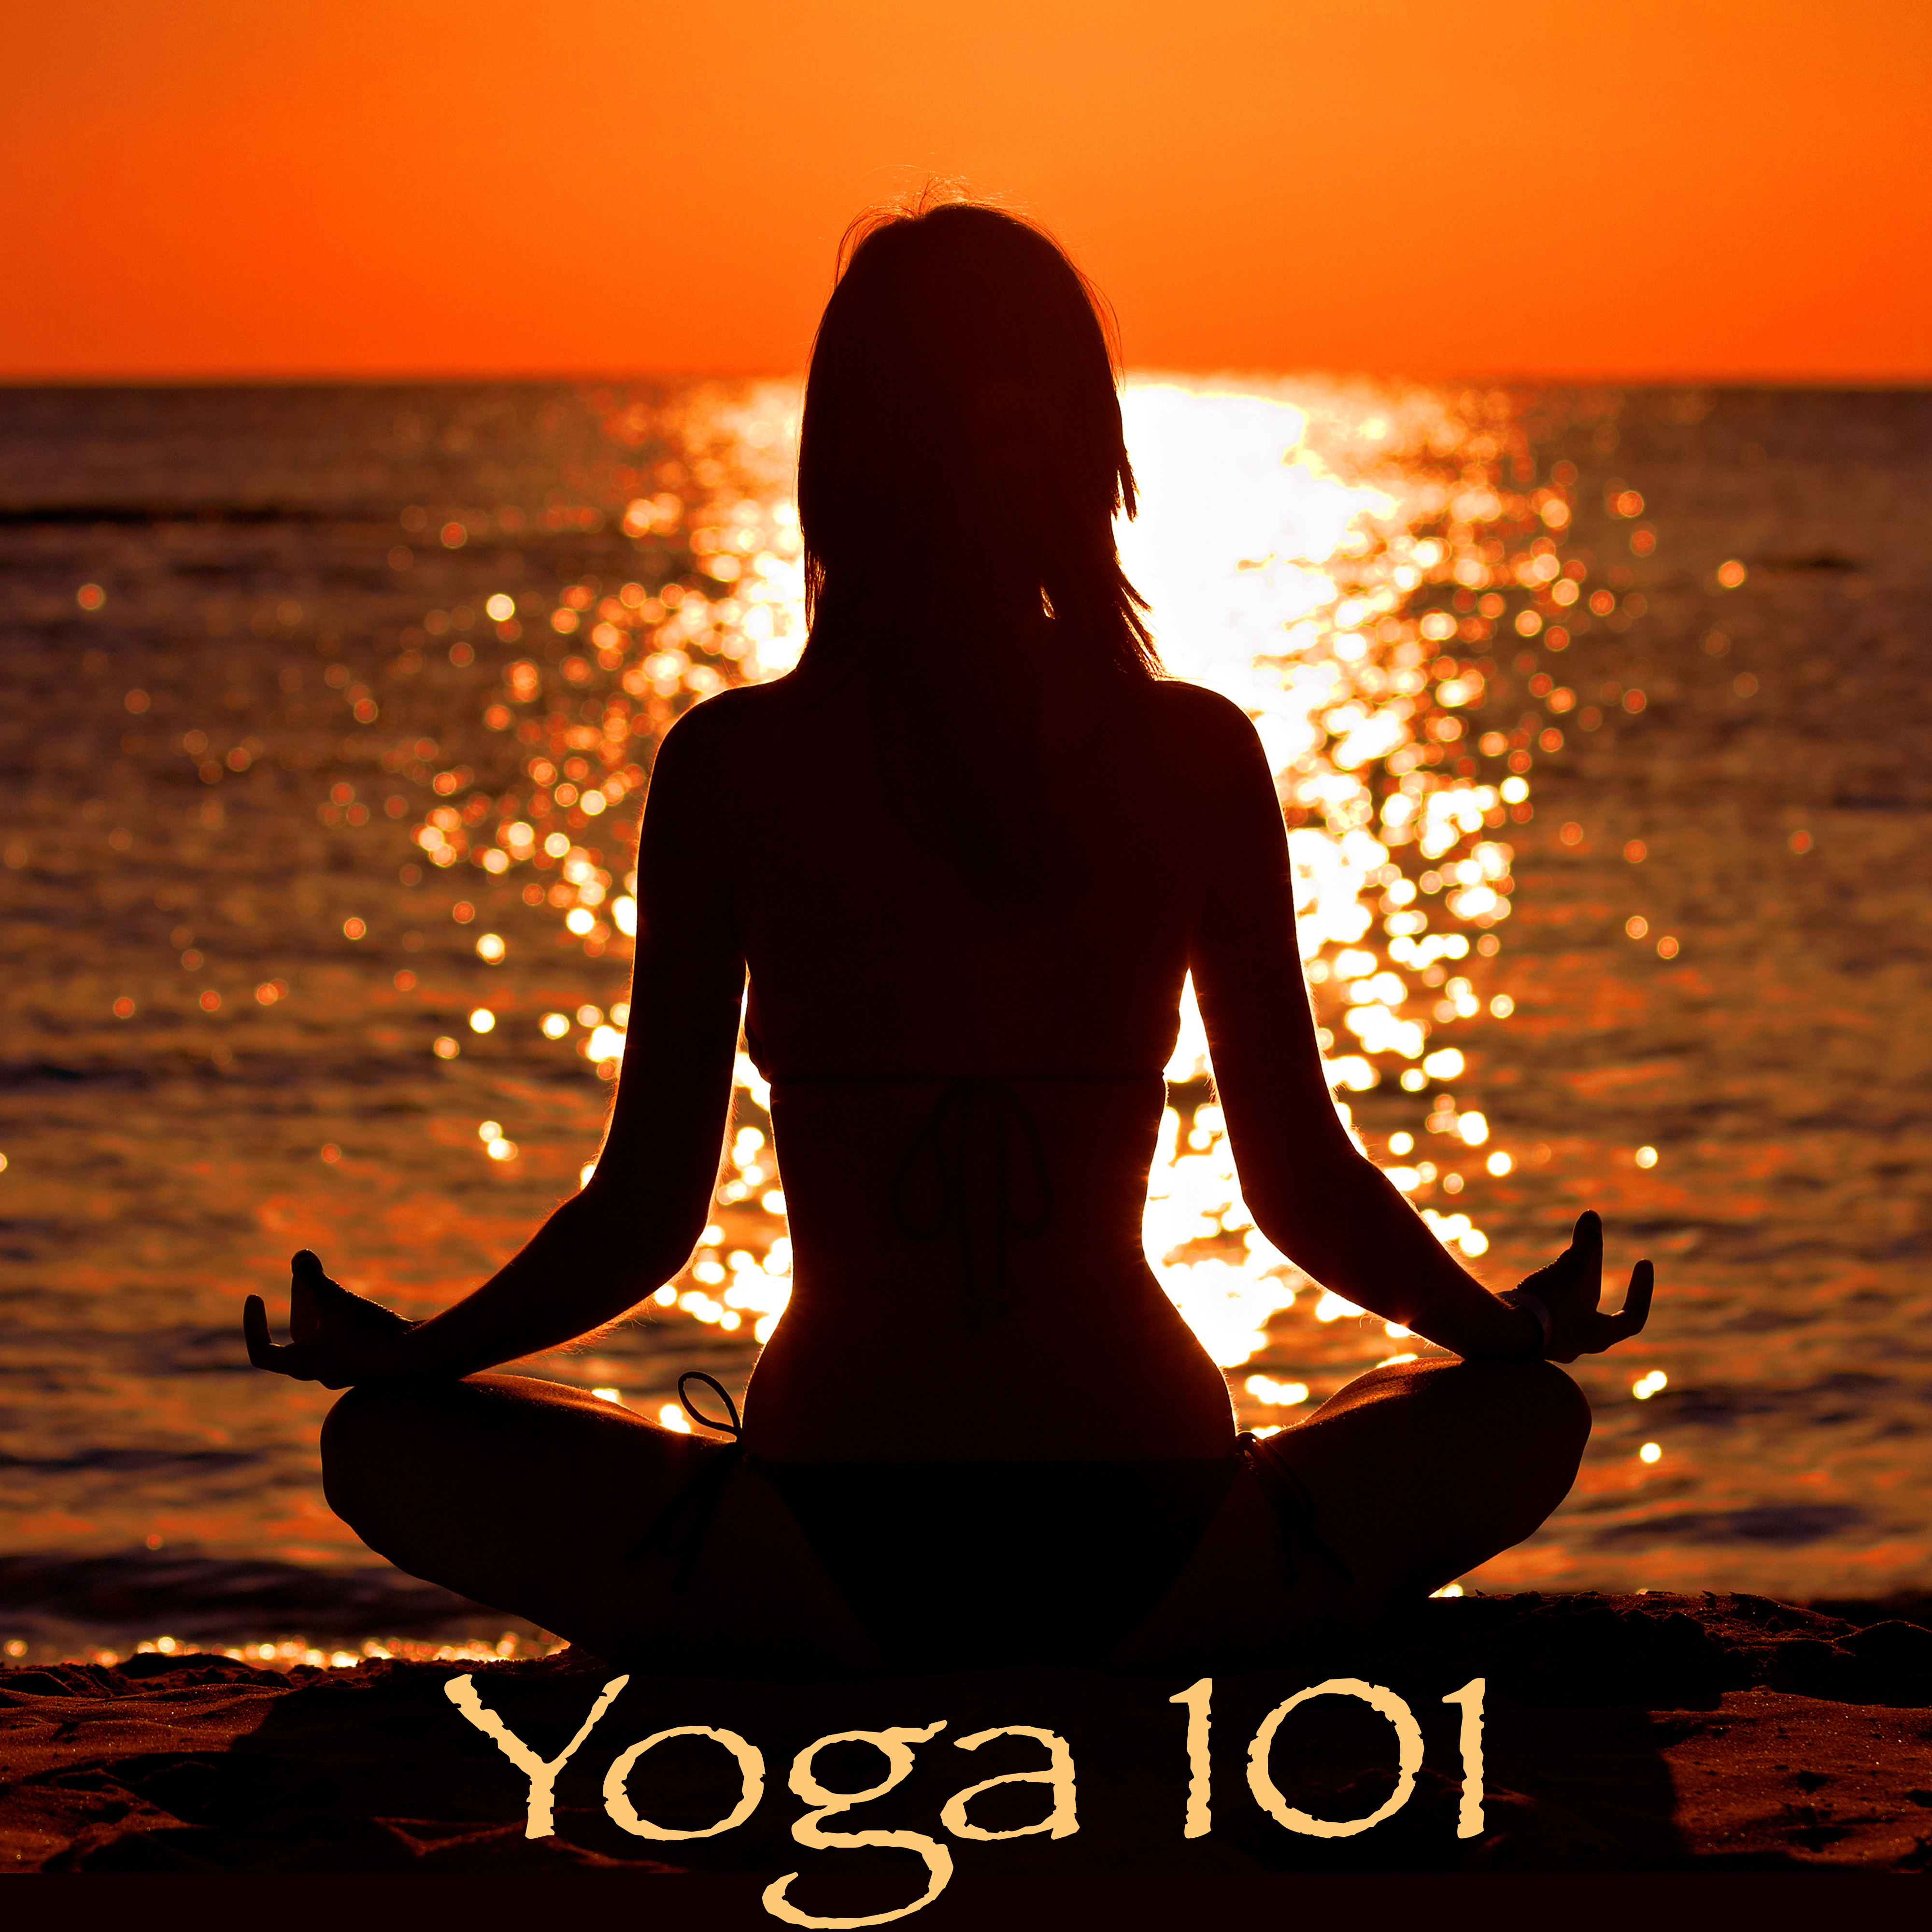 Yoga 101 - Nature Sounds Tibetan Zen Healing Music for Yoga Poses and Chakra Balancing, Reiki, Tai Chi, Qi Gong, Zen Meditation and Relaxation